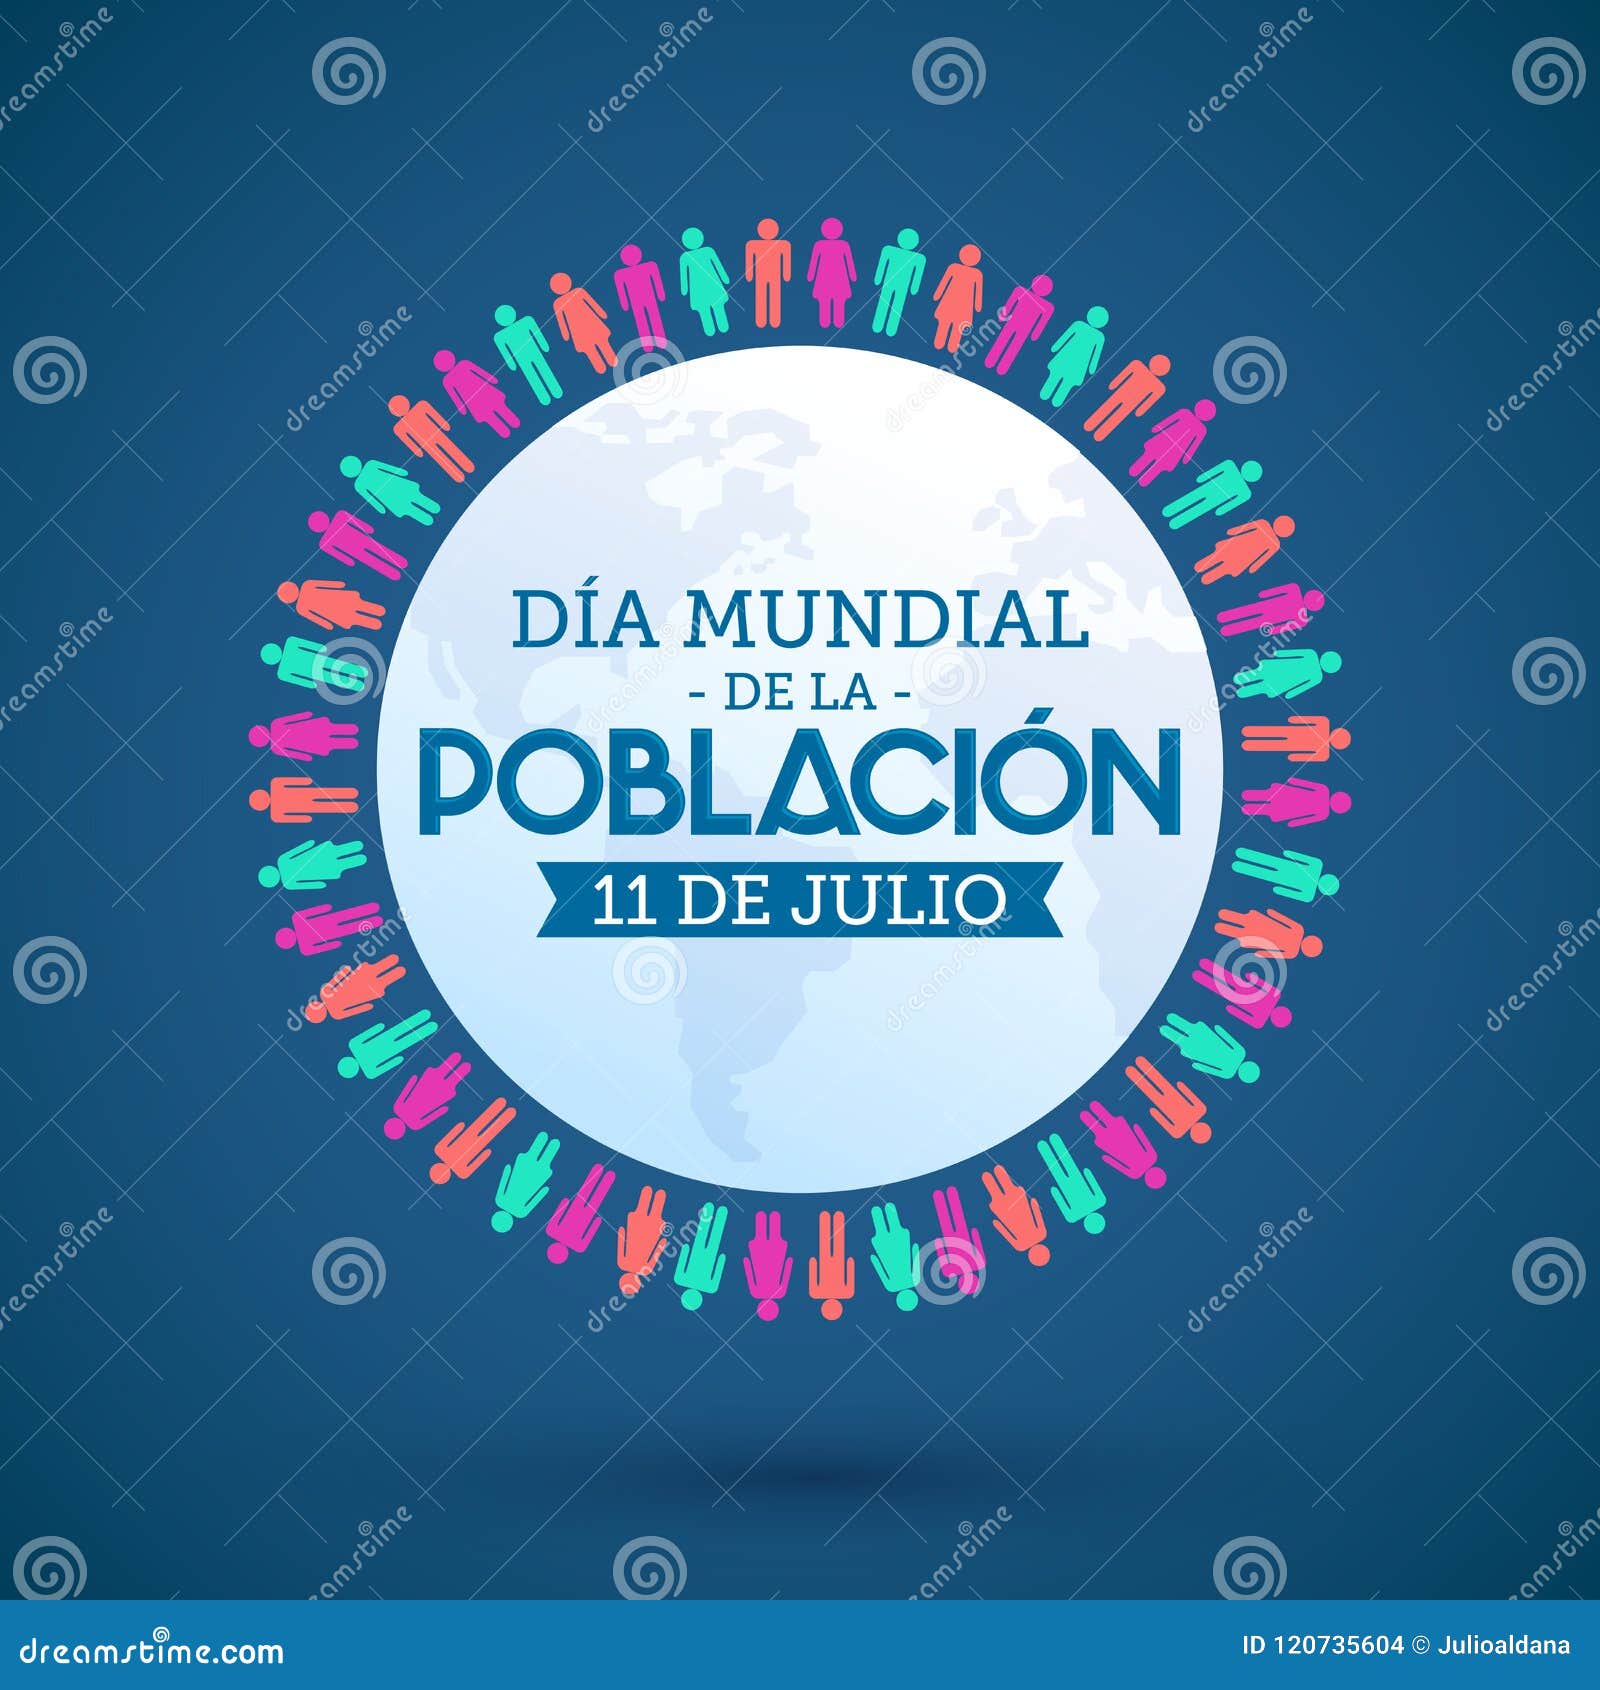 dia mundial de la poblacion julio 11, world population day july 11 spanish text